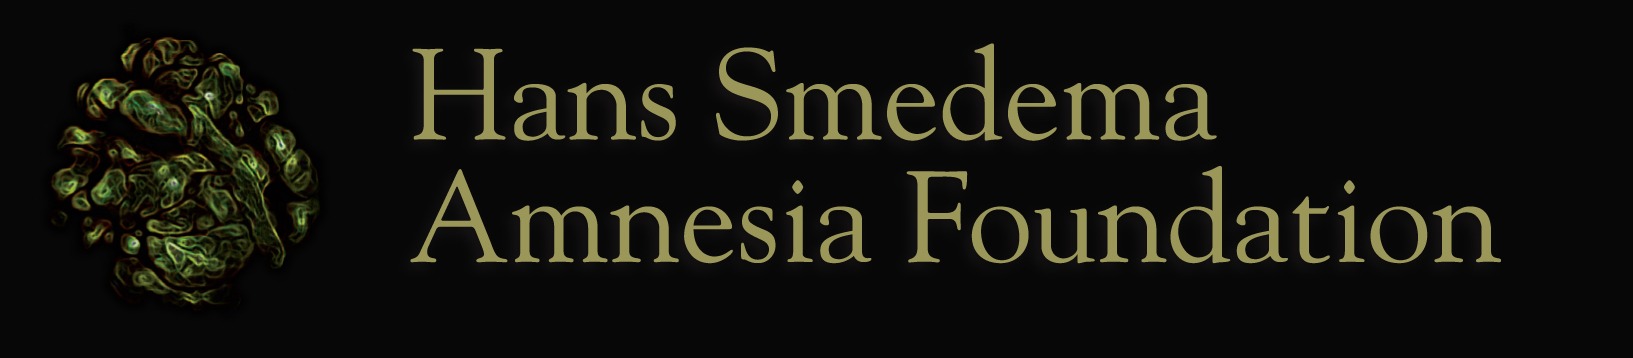 Official website of the 'Hans Smedema Amnesia Foundation'